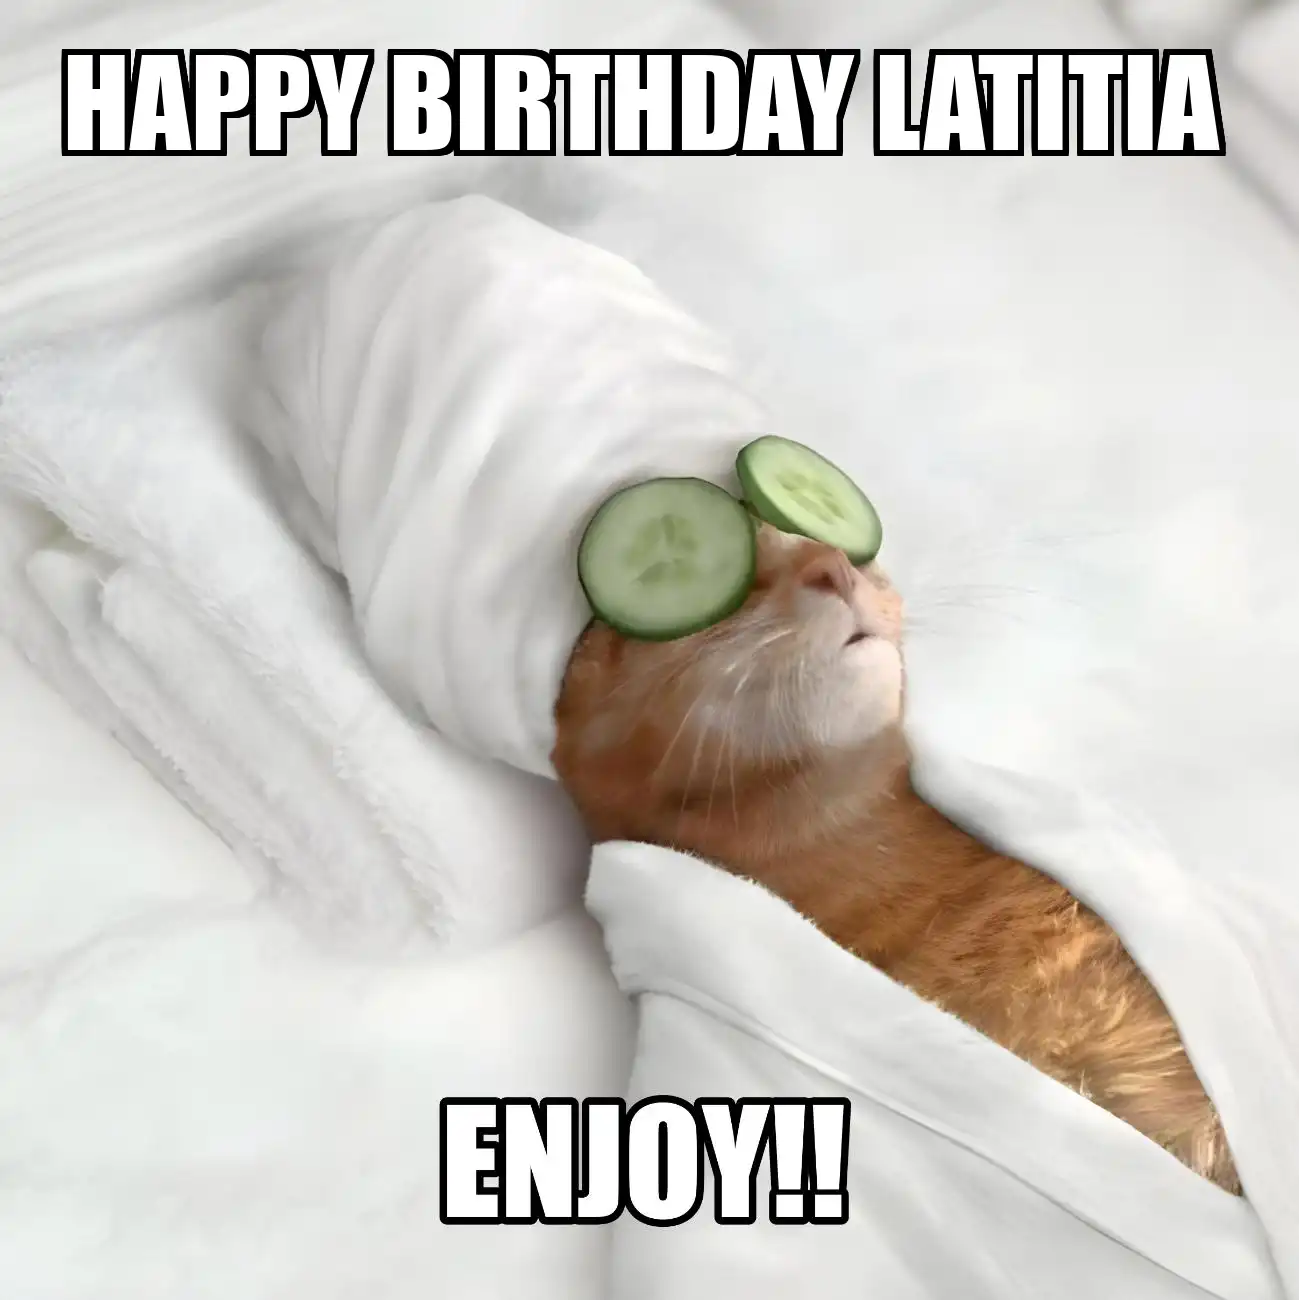 Happy Birthday Latitia Enjoy Cat Meme